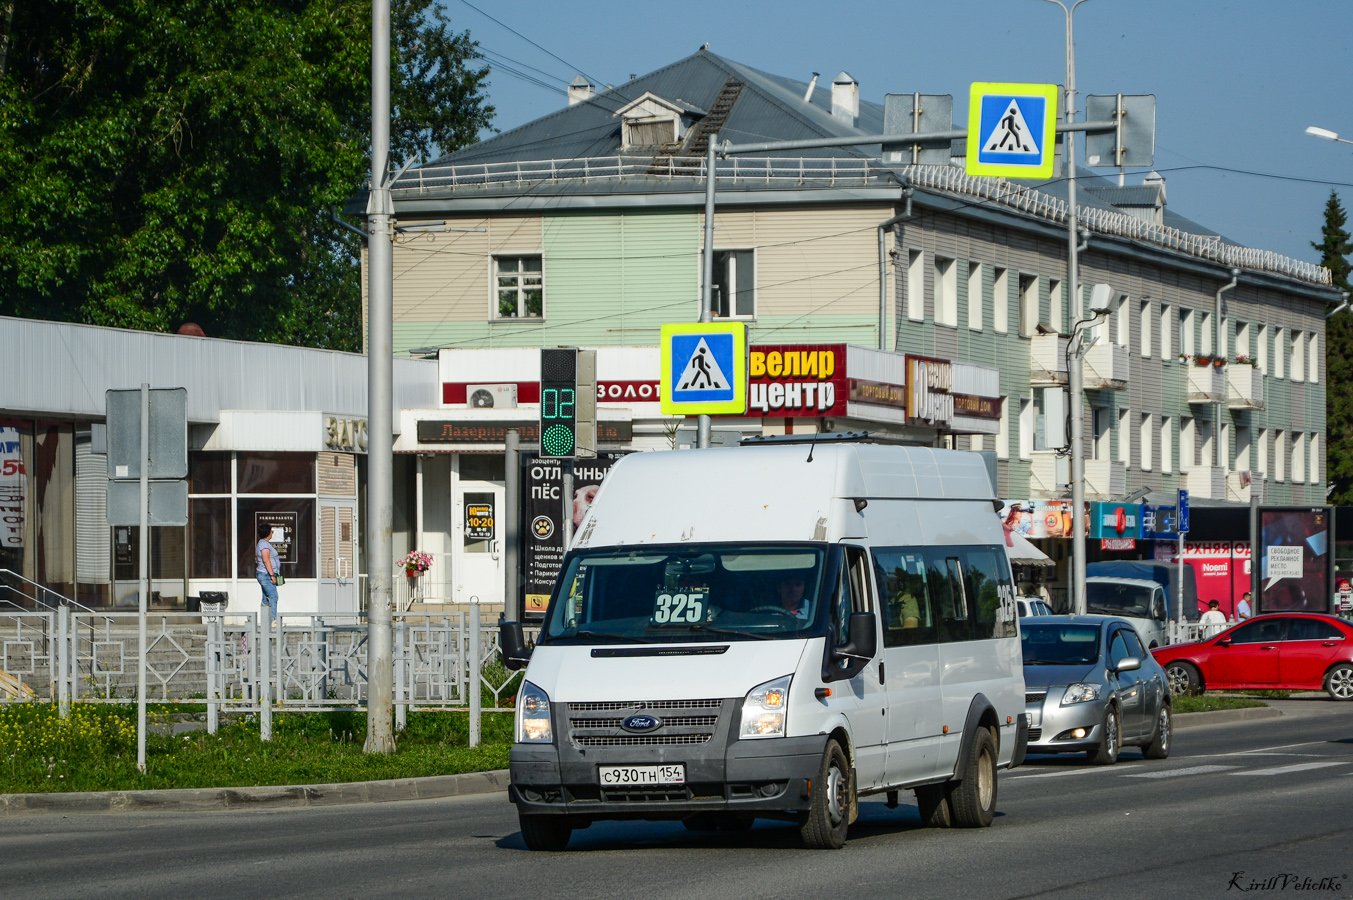 Novosibirsk region, Avtodom (Ford Transit) č. С 930 ТН 154